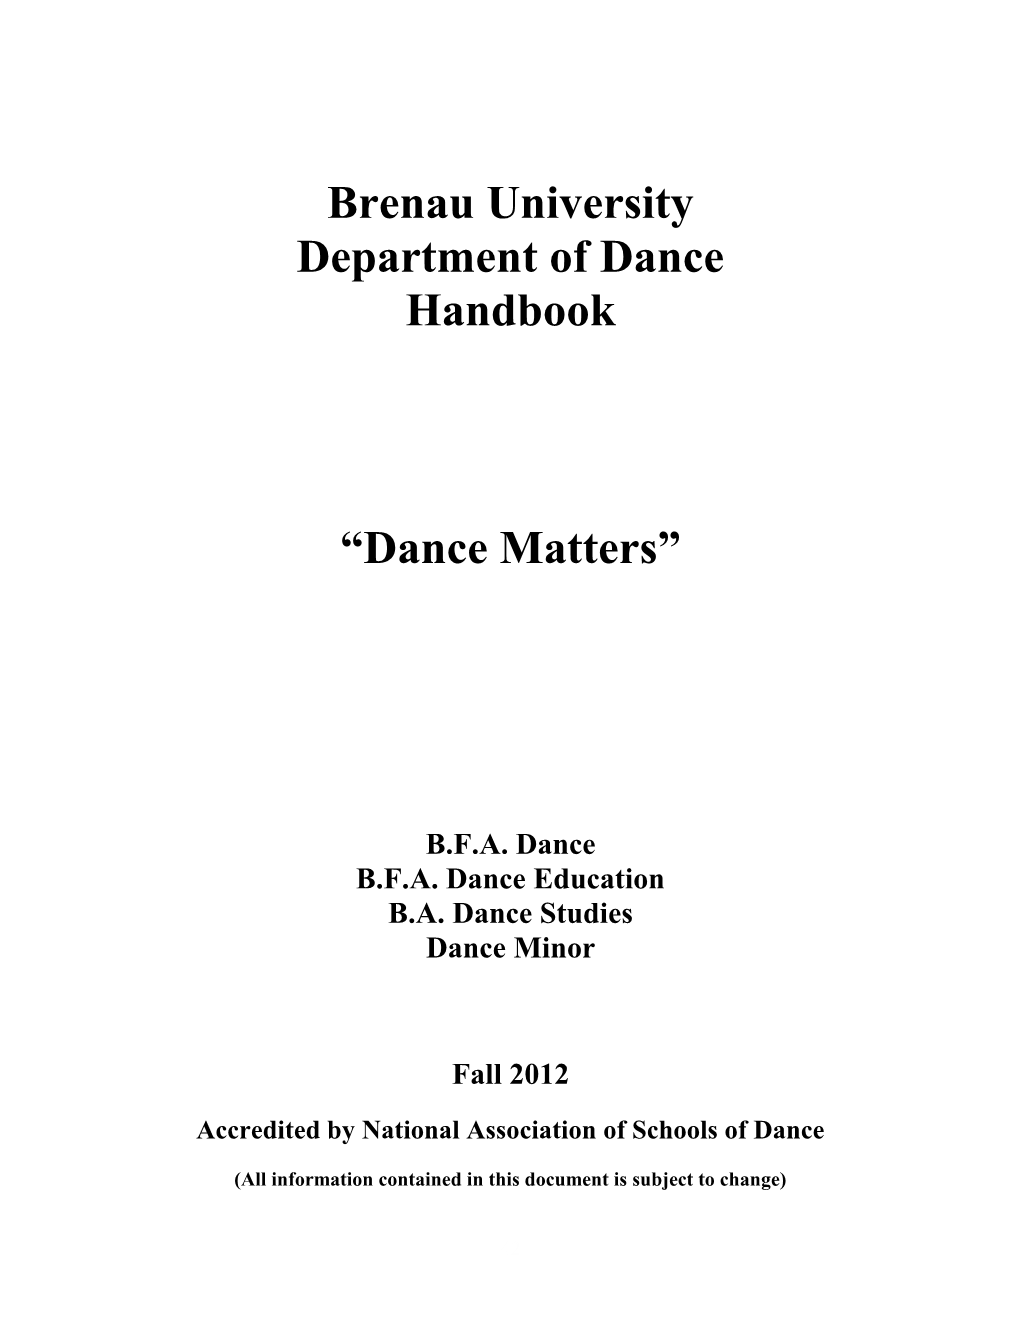 Brenau University Department of Dance Handbook “Dance Matters”